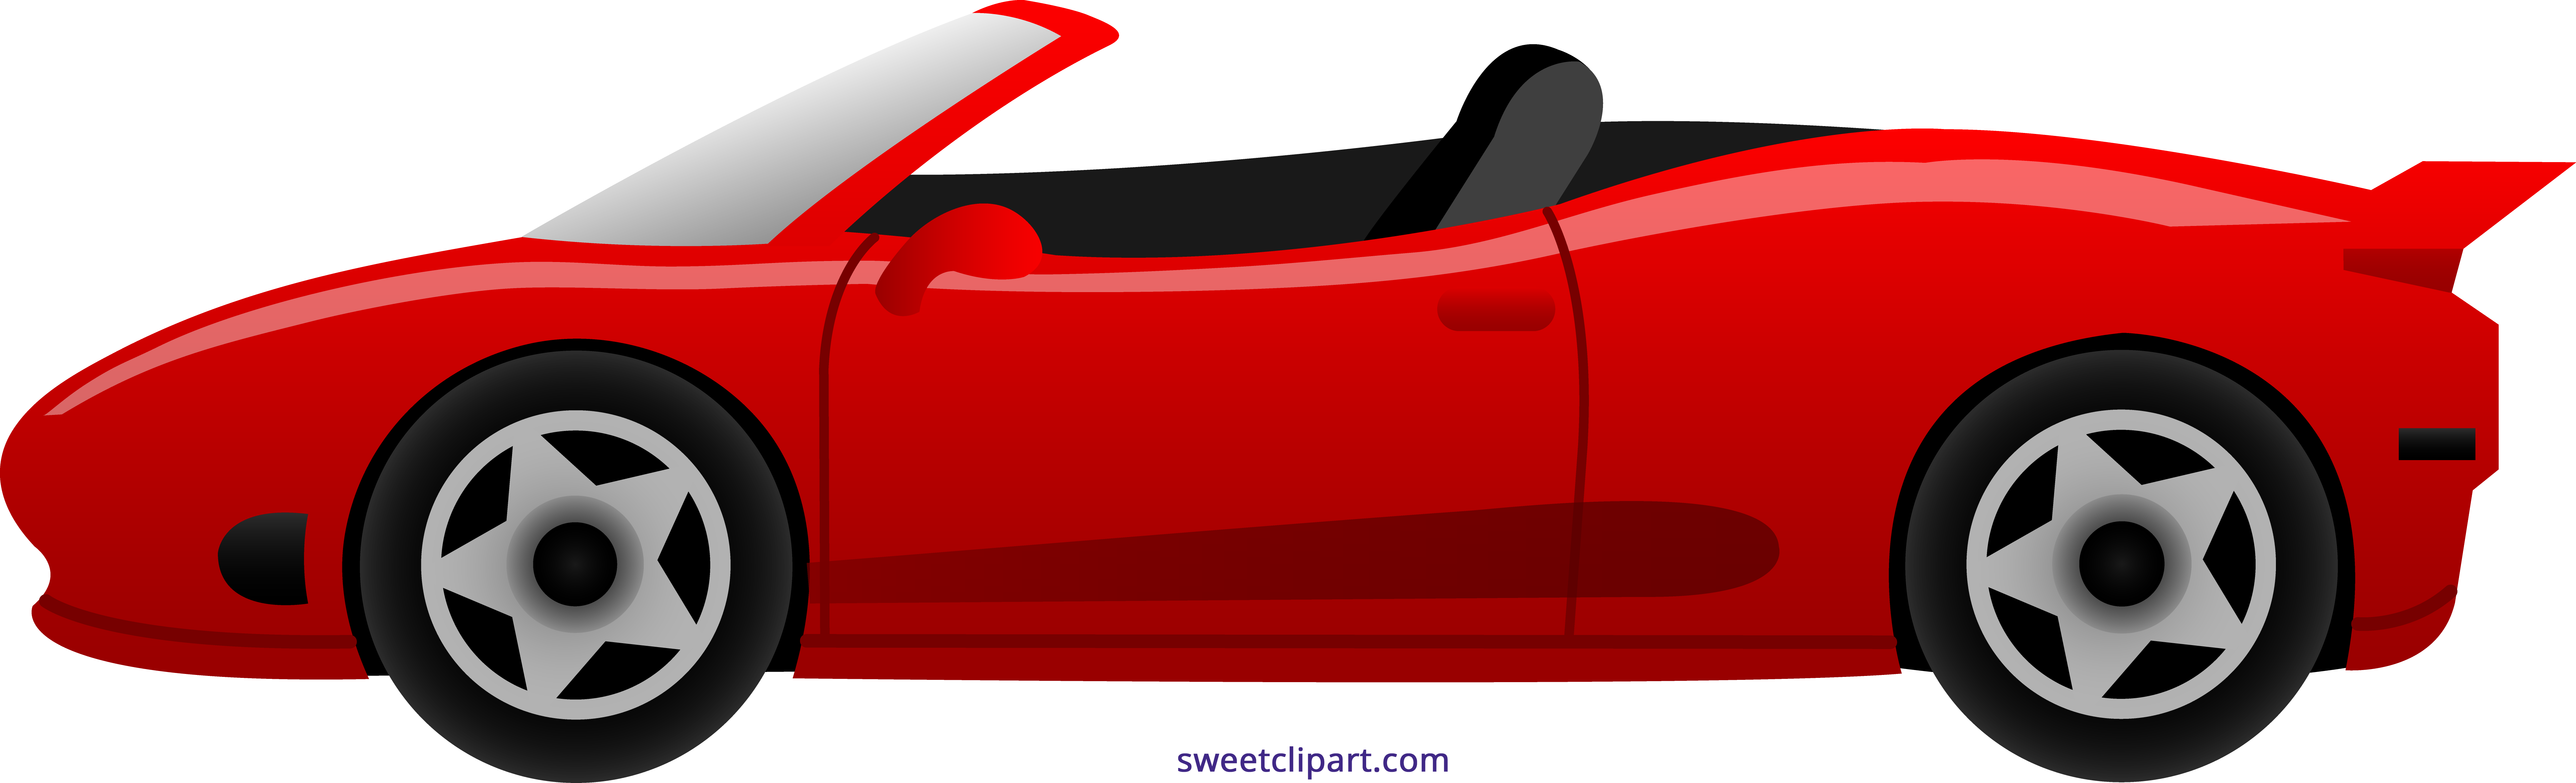 Red Ferrari Car Clipart